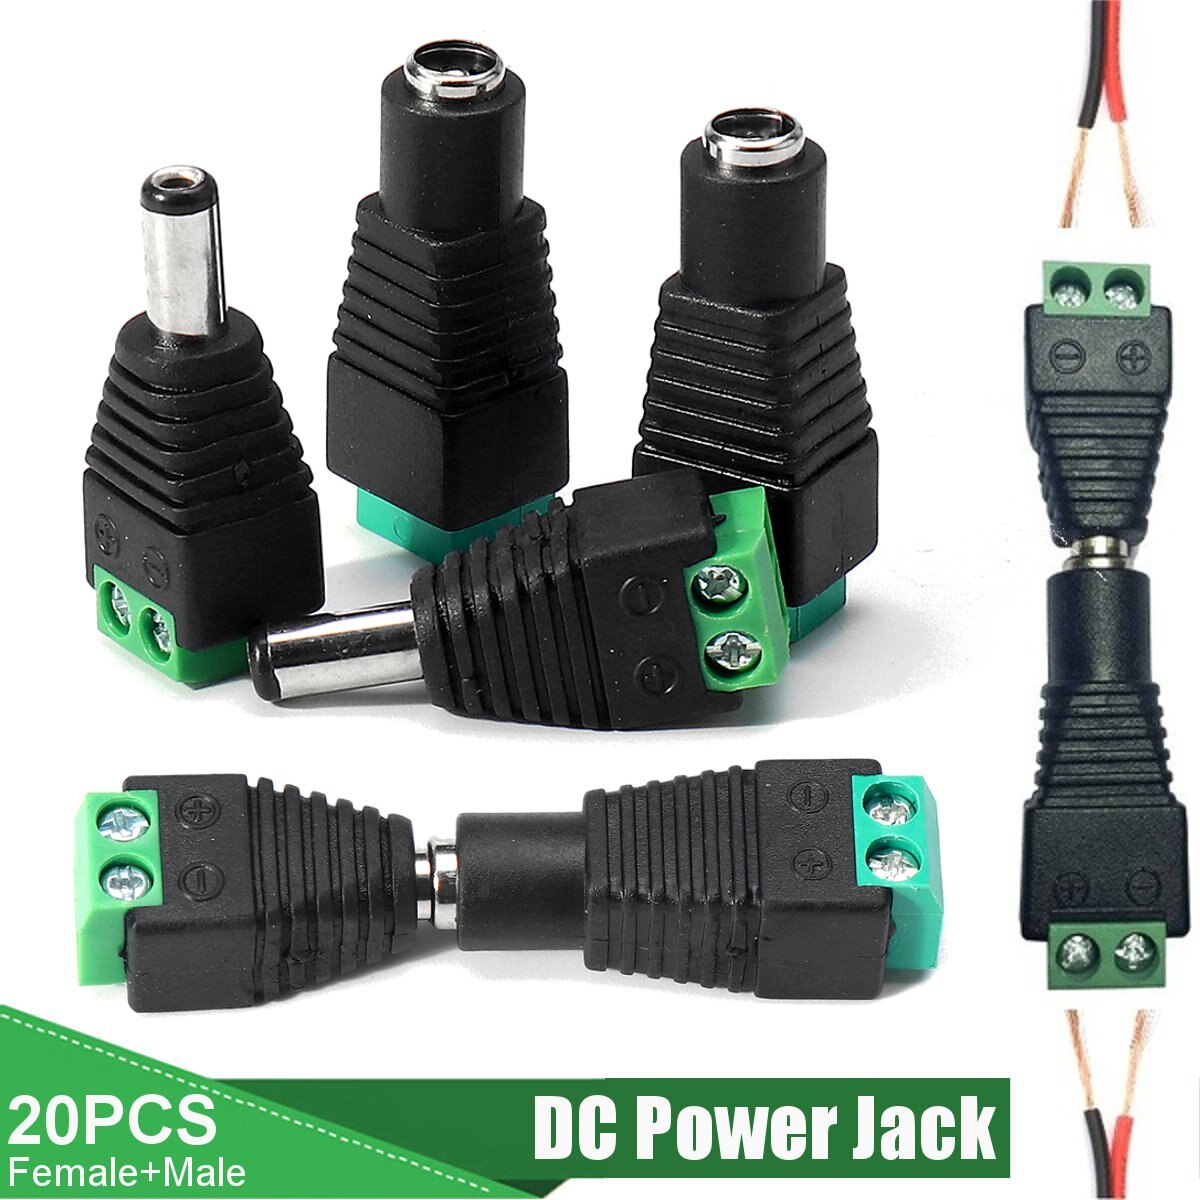 20 Pcs Man Vrouw Dc Power Jack Connectors Cctv Camera Led Strip Adapter Plug Cable Connector Voor Led Light Strip accessoires